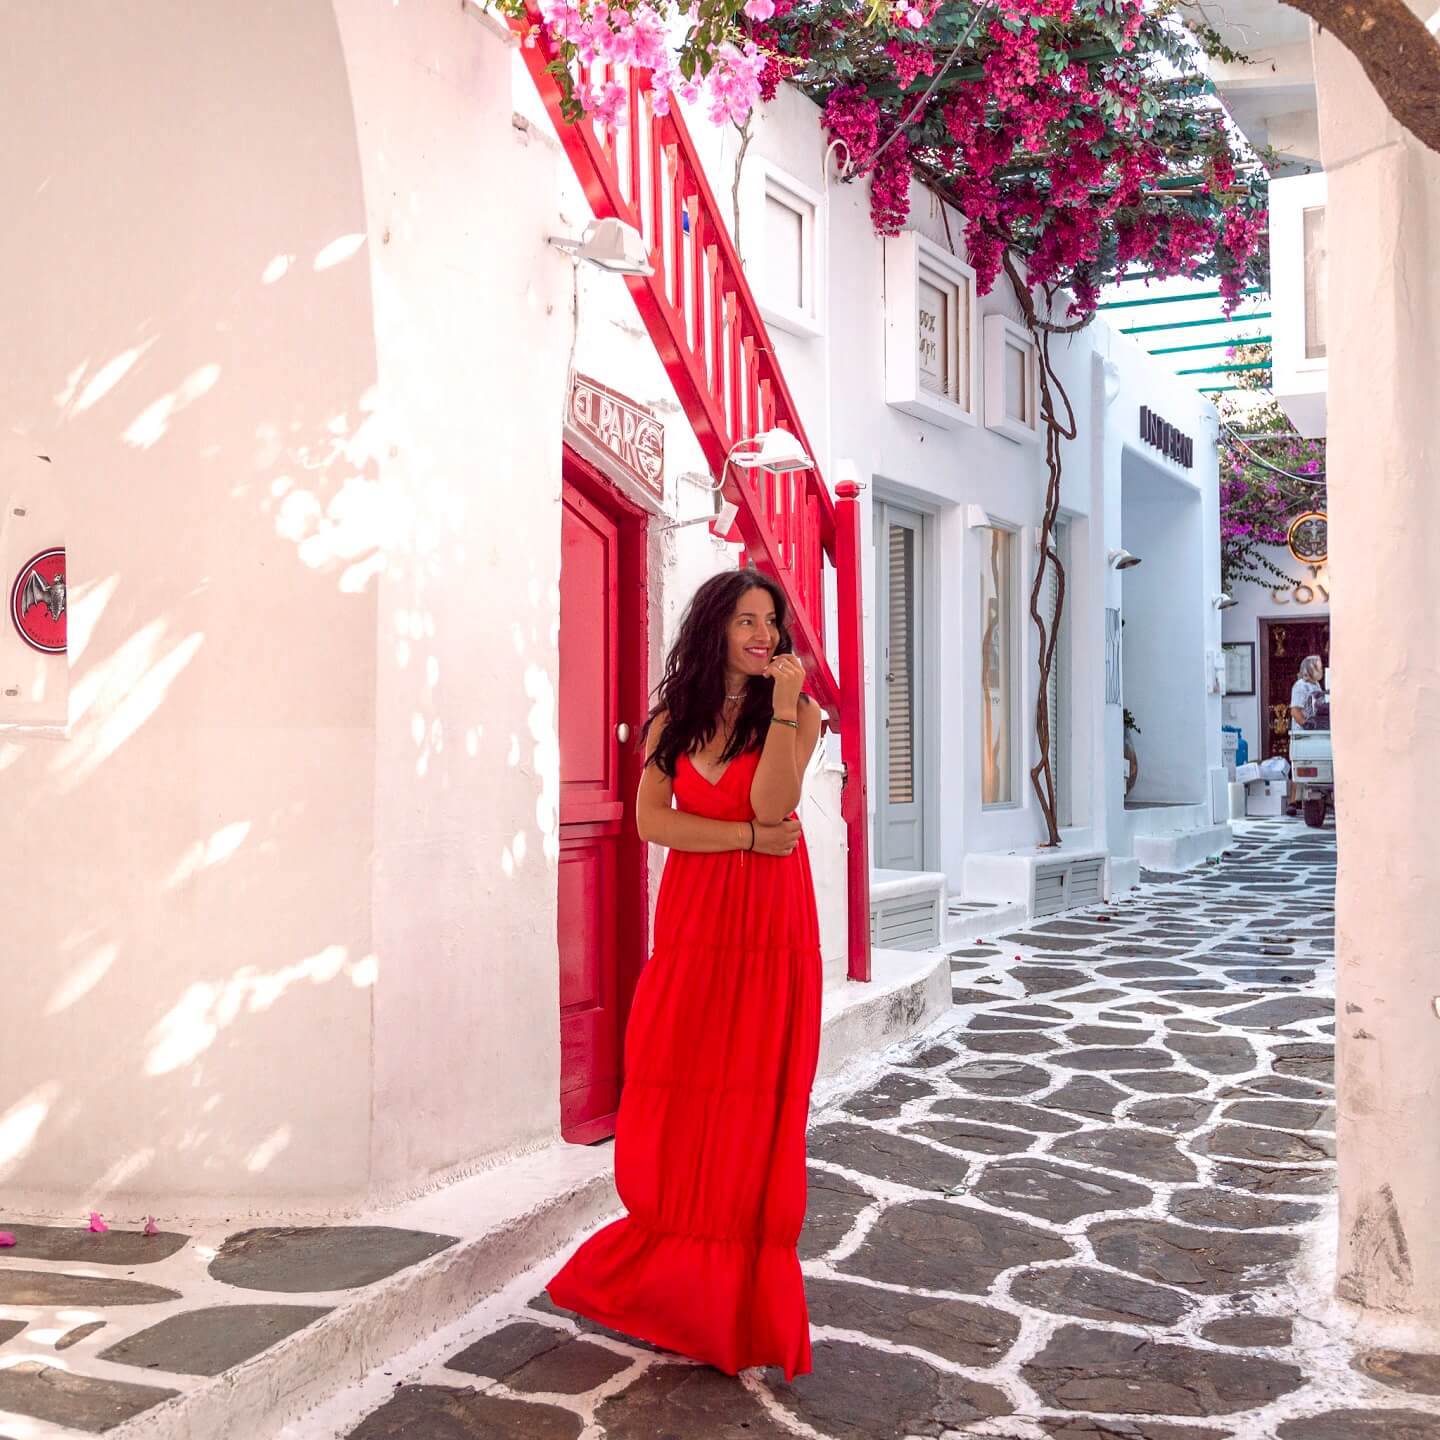 Girl in long red dress poses for instagram